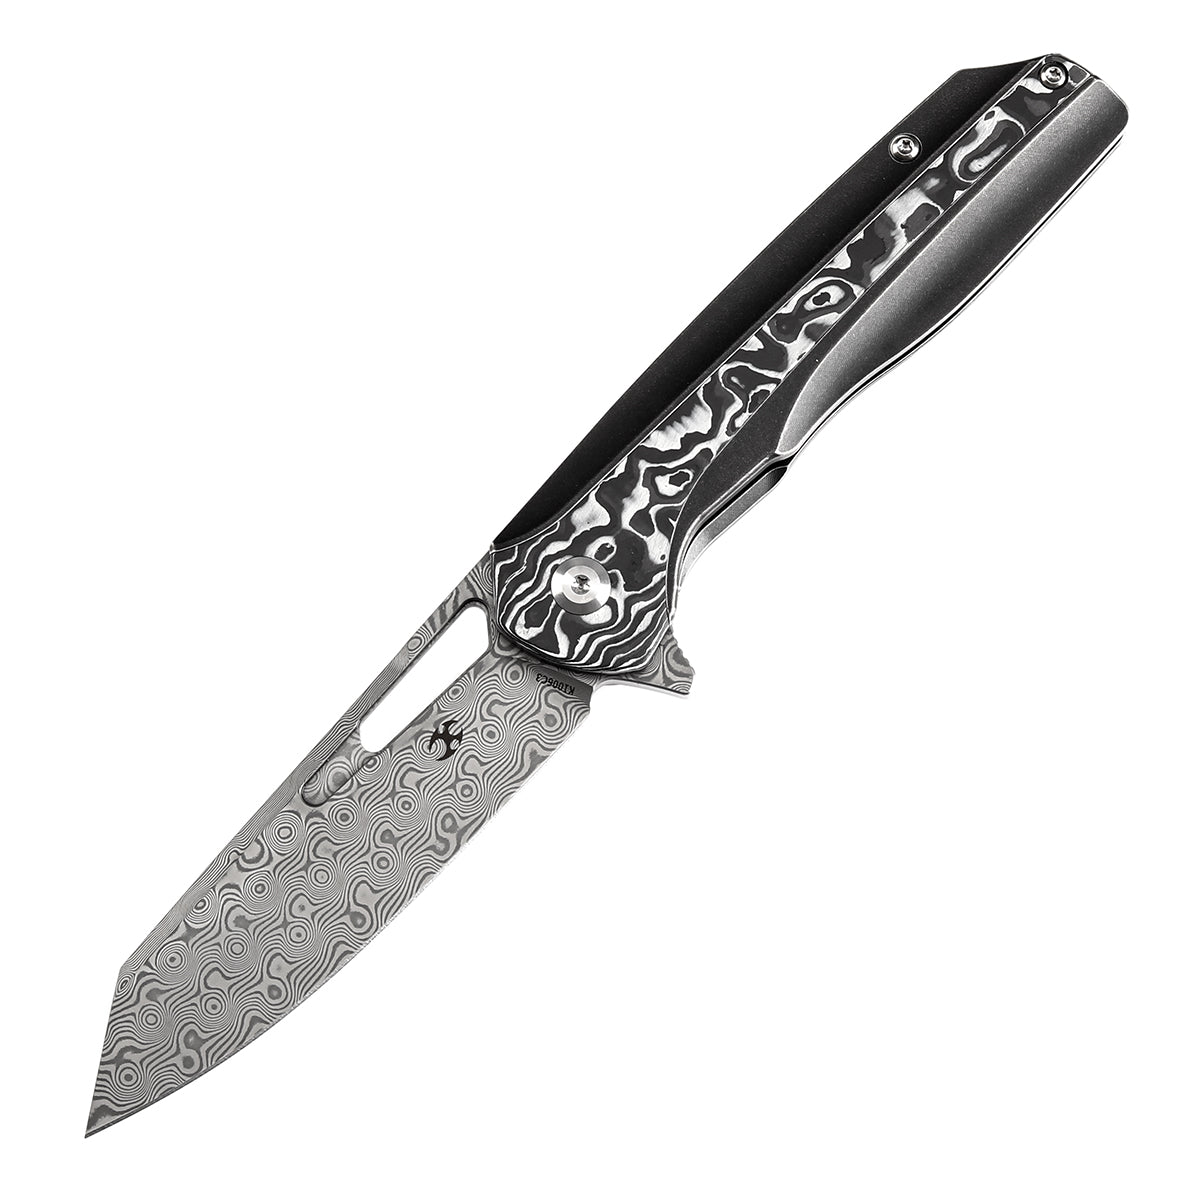 Kansept Shard K1006C3 大马士革刀片白色碳纤维手柄折叠刀